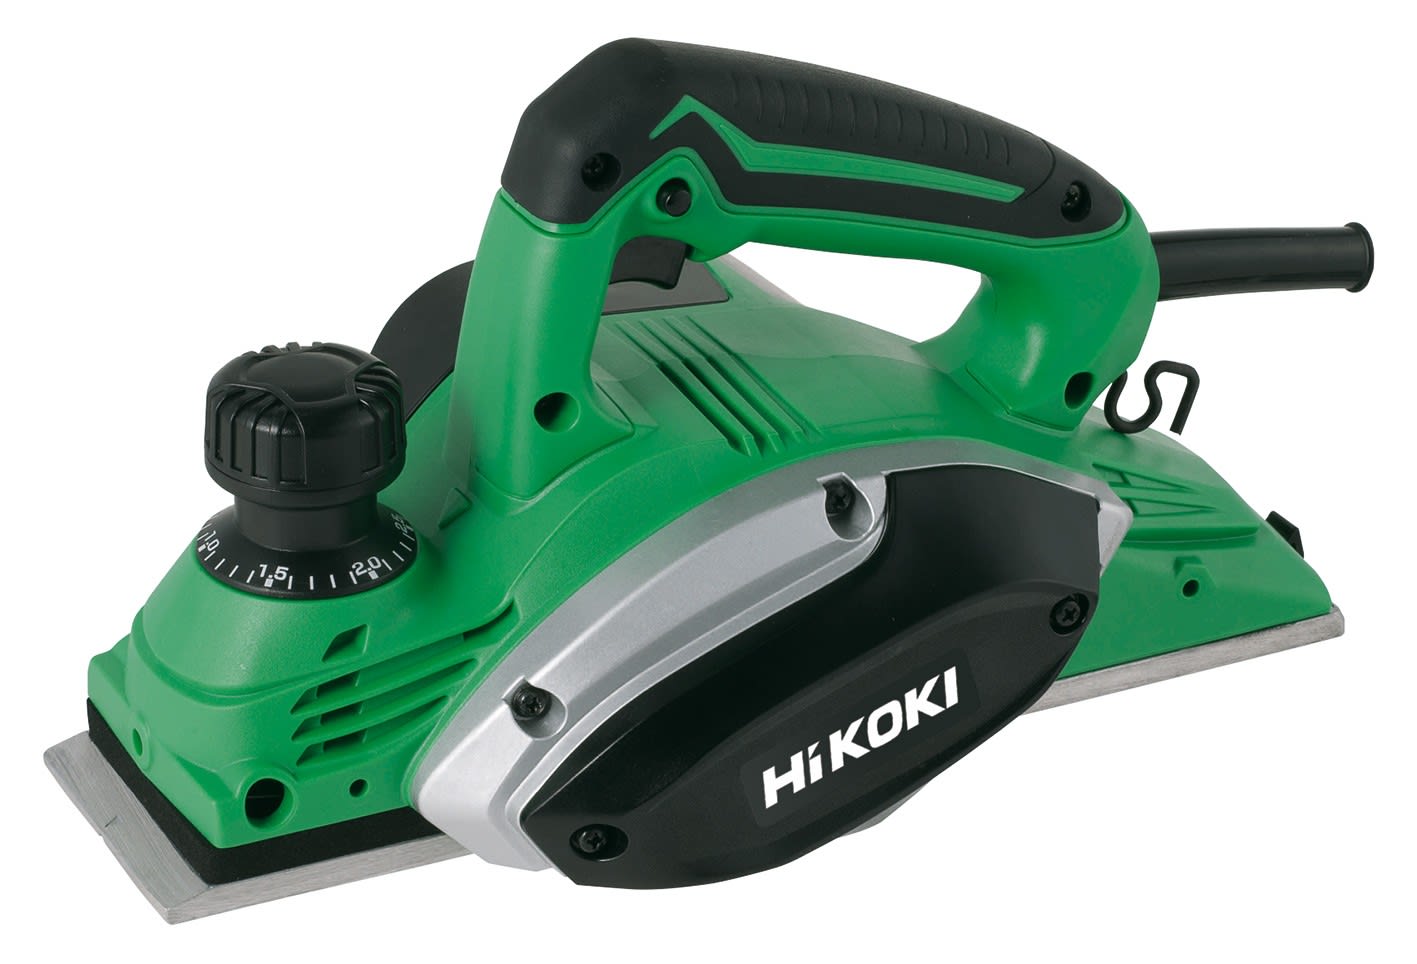 Hikoki Power Tools - Rabot 620W largeur 82mm feuillure 9mm prof.cpe 2.6mm vit à vide 17000tr/mn